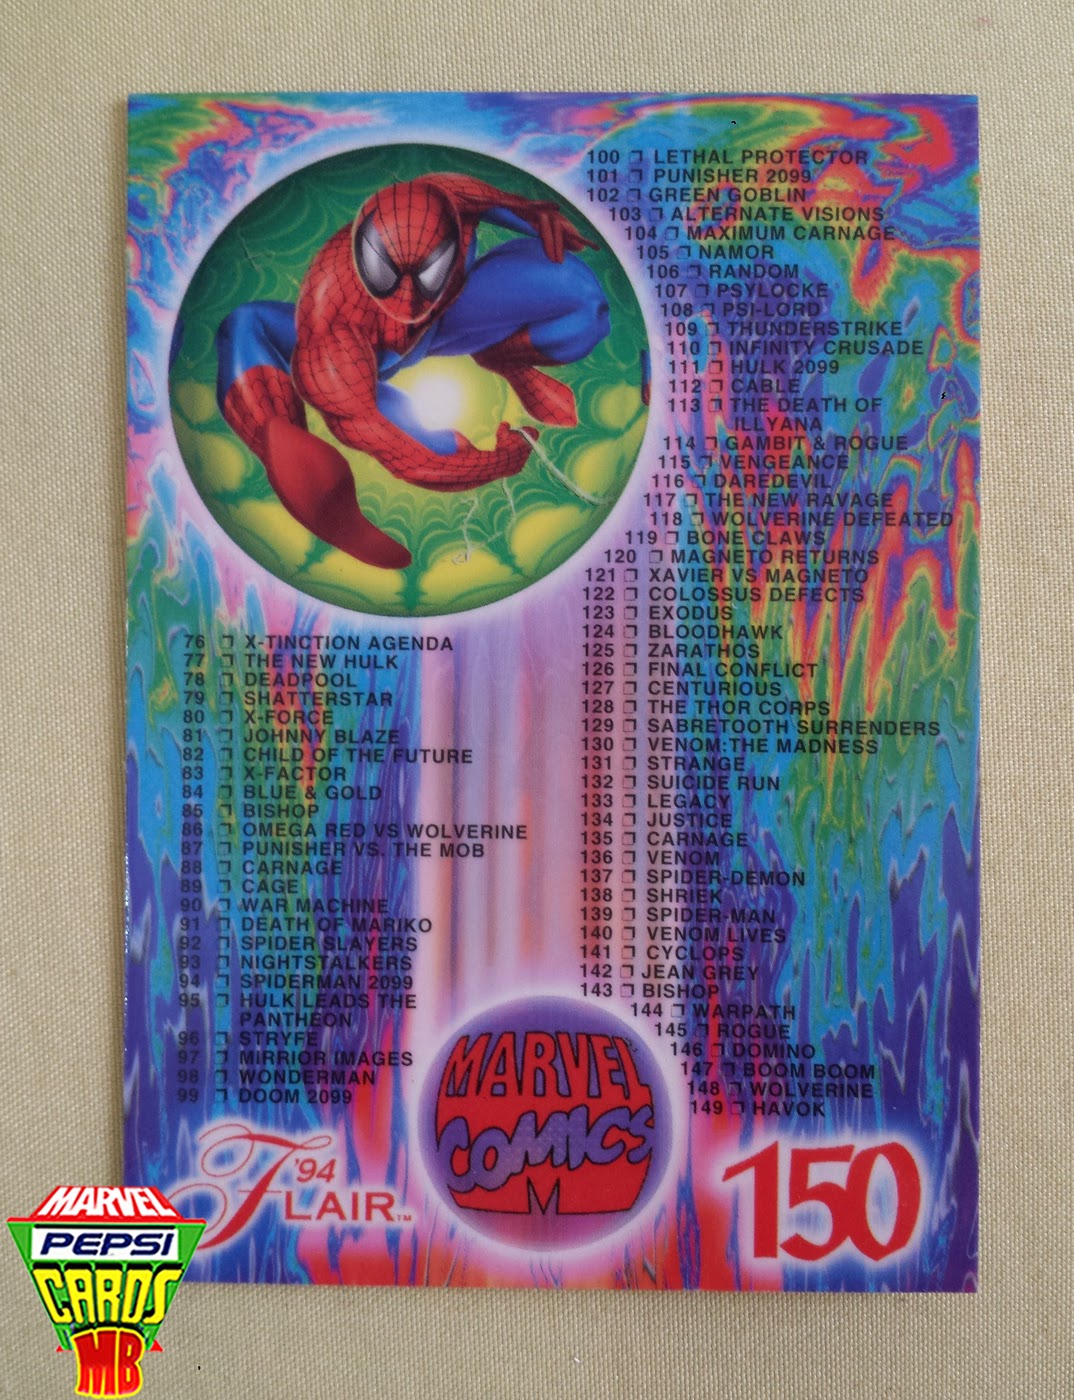 MarvelPepsiCardsMB Marvel Universe Flair '94 1994 150